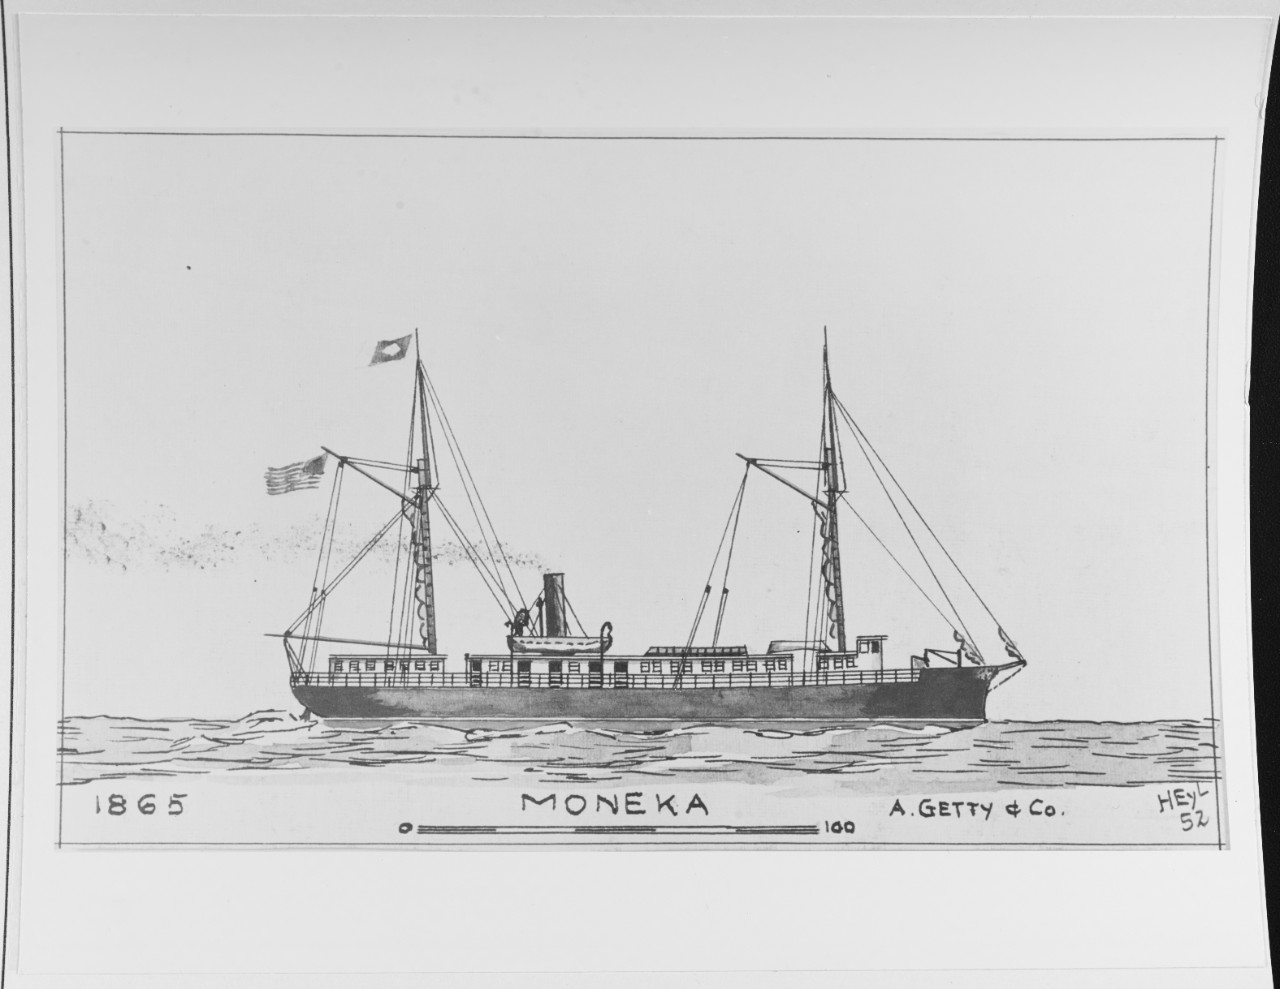 MONEKA (American merchant steamer, 1865-1890)